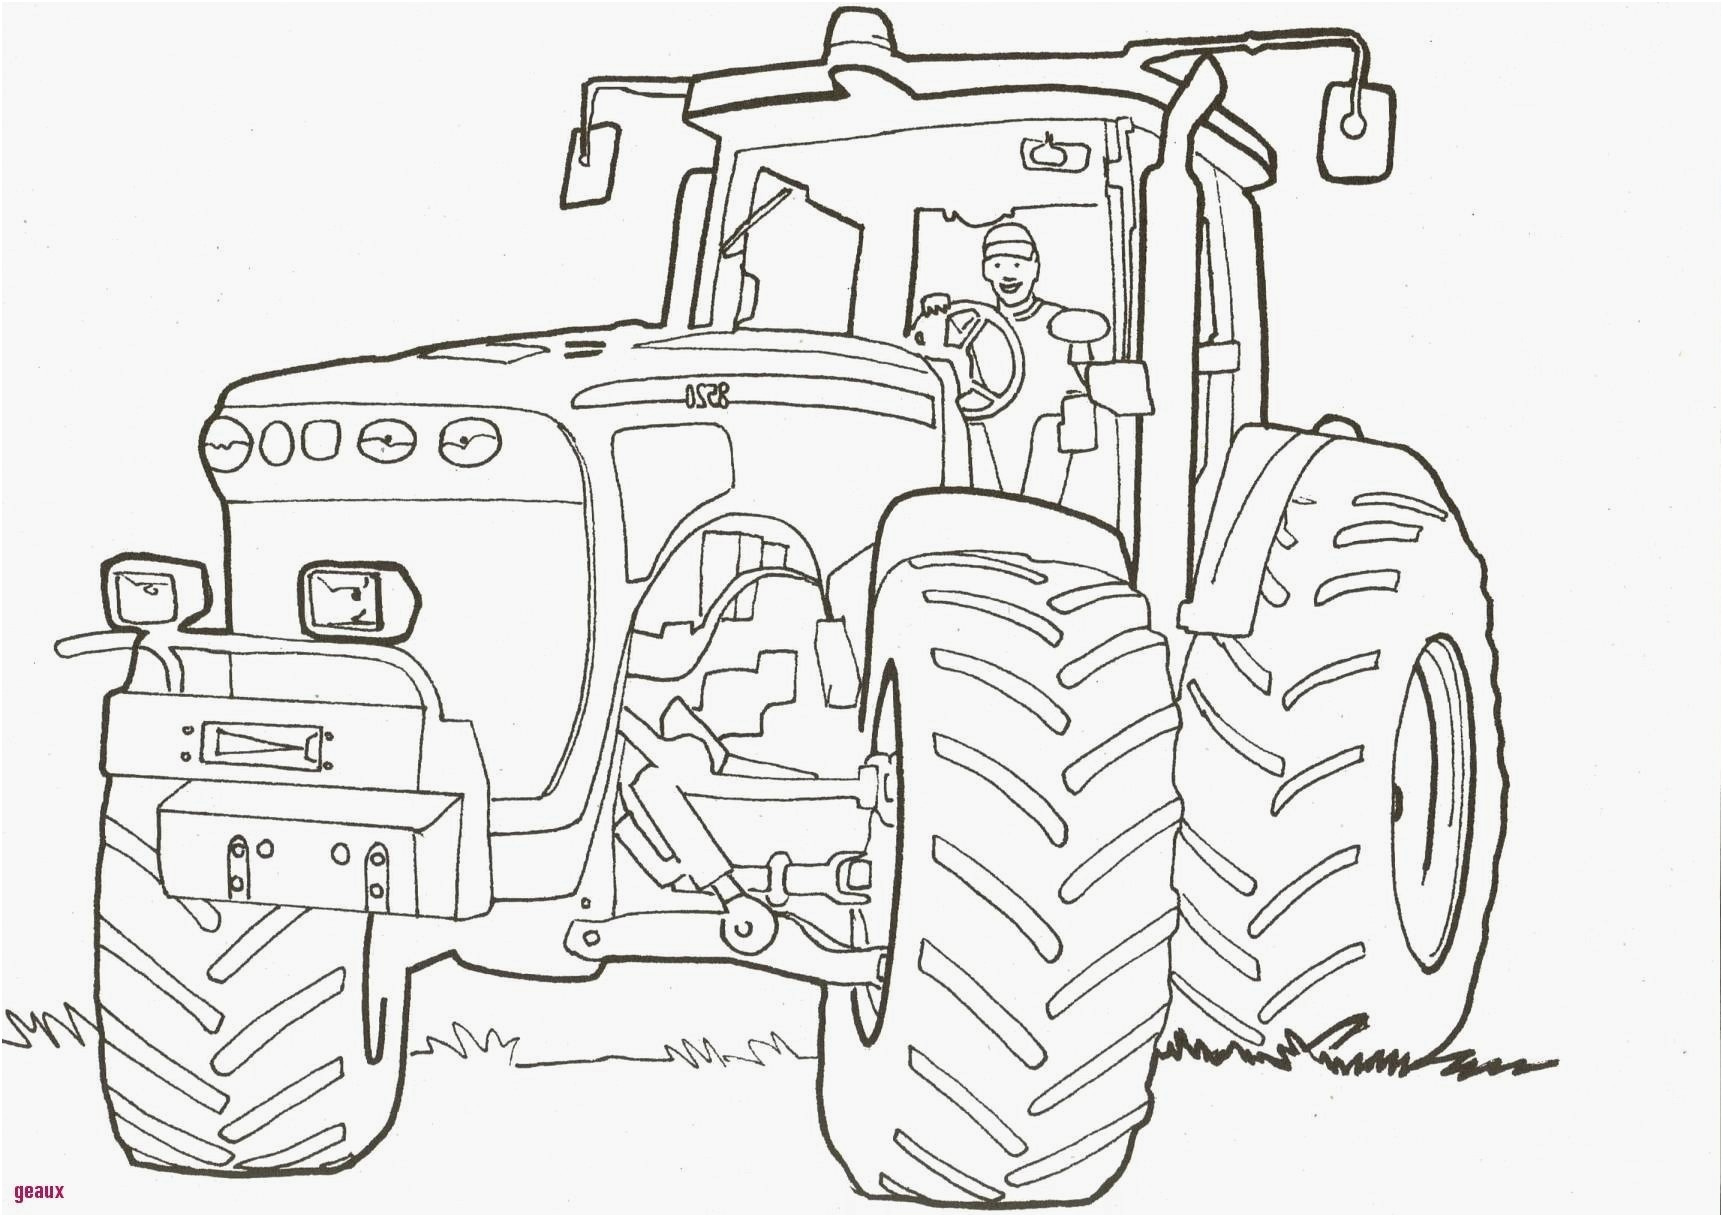 dessin d un tracteur of coloriage tracteur john deere imprimer of dessin d un tracteur 10 coloriage de tracteur imprimer